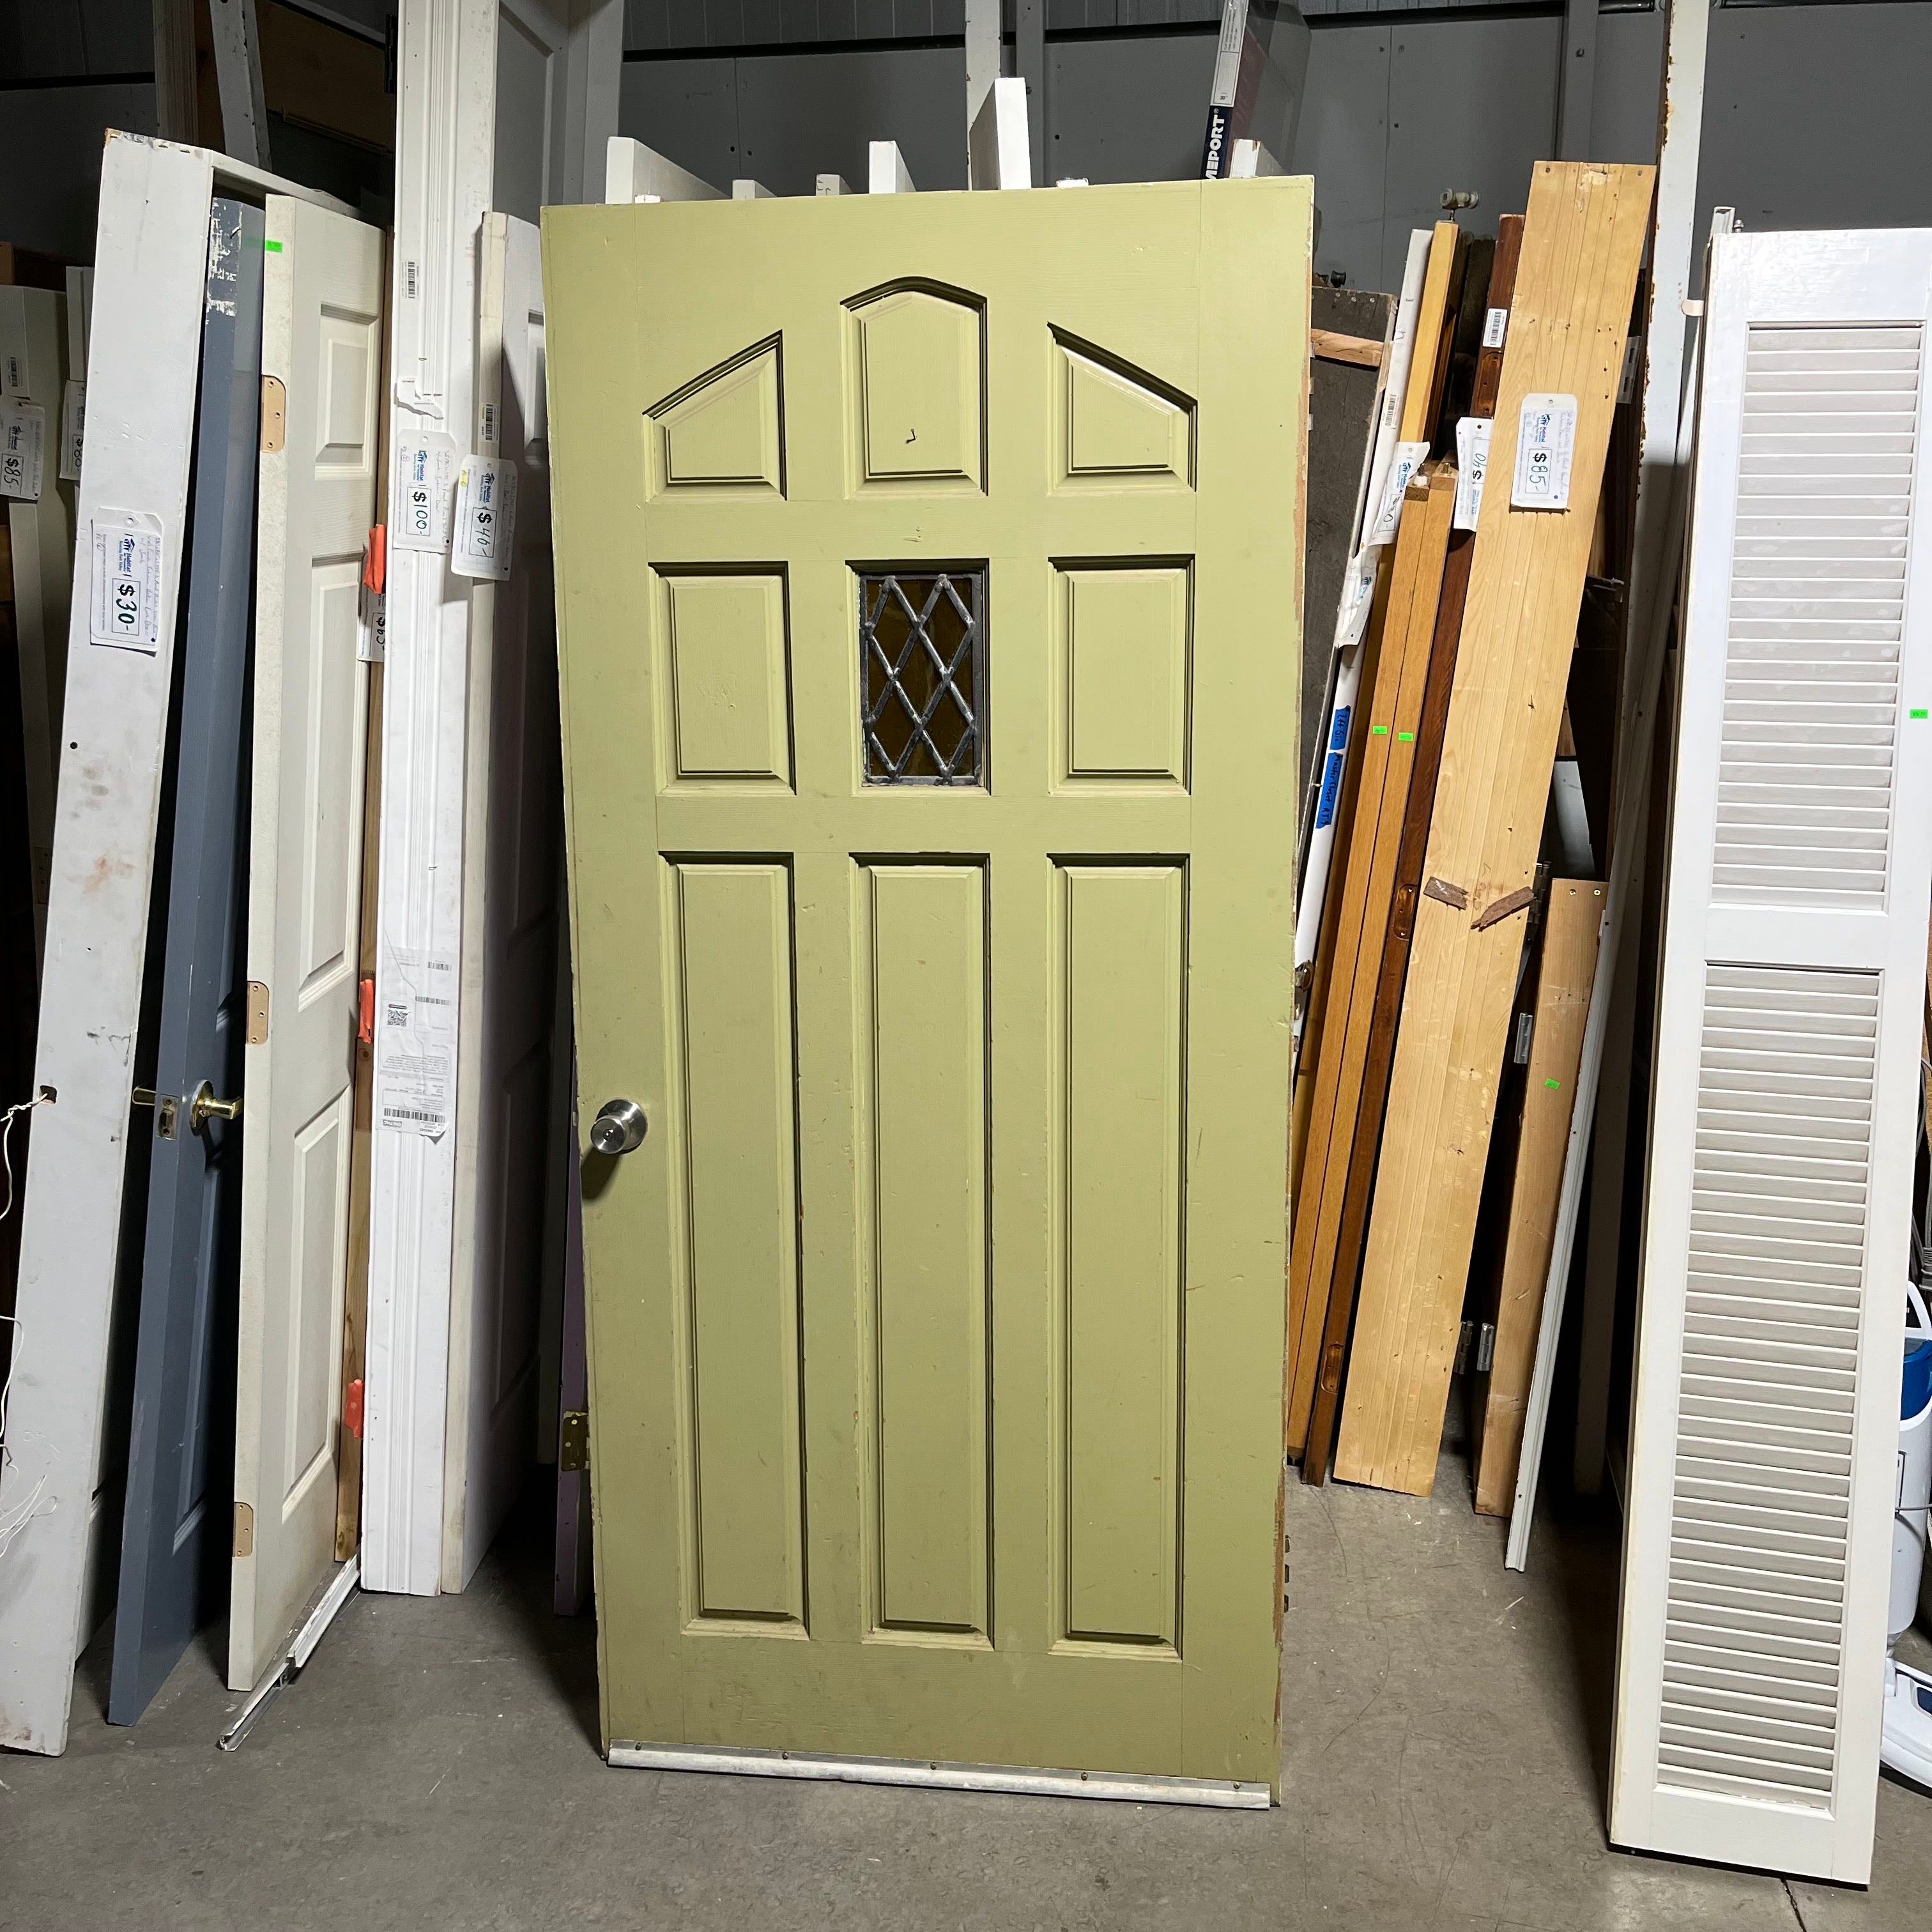 35.75"x 78.5"x 1.75" 1 Glass Metal Lattice Panel 8 Fir Panel Painted Green White Exterior Entry Door